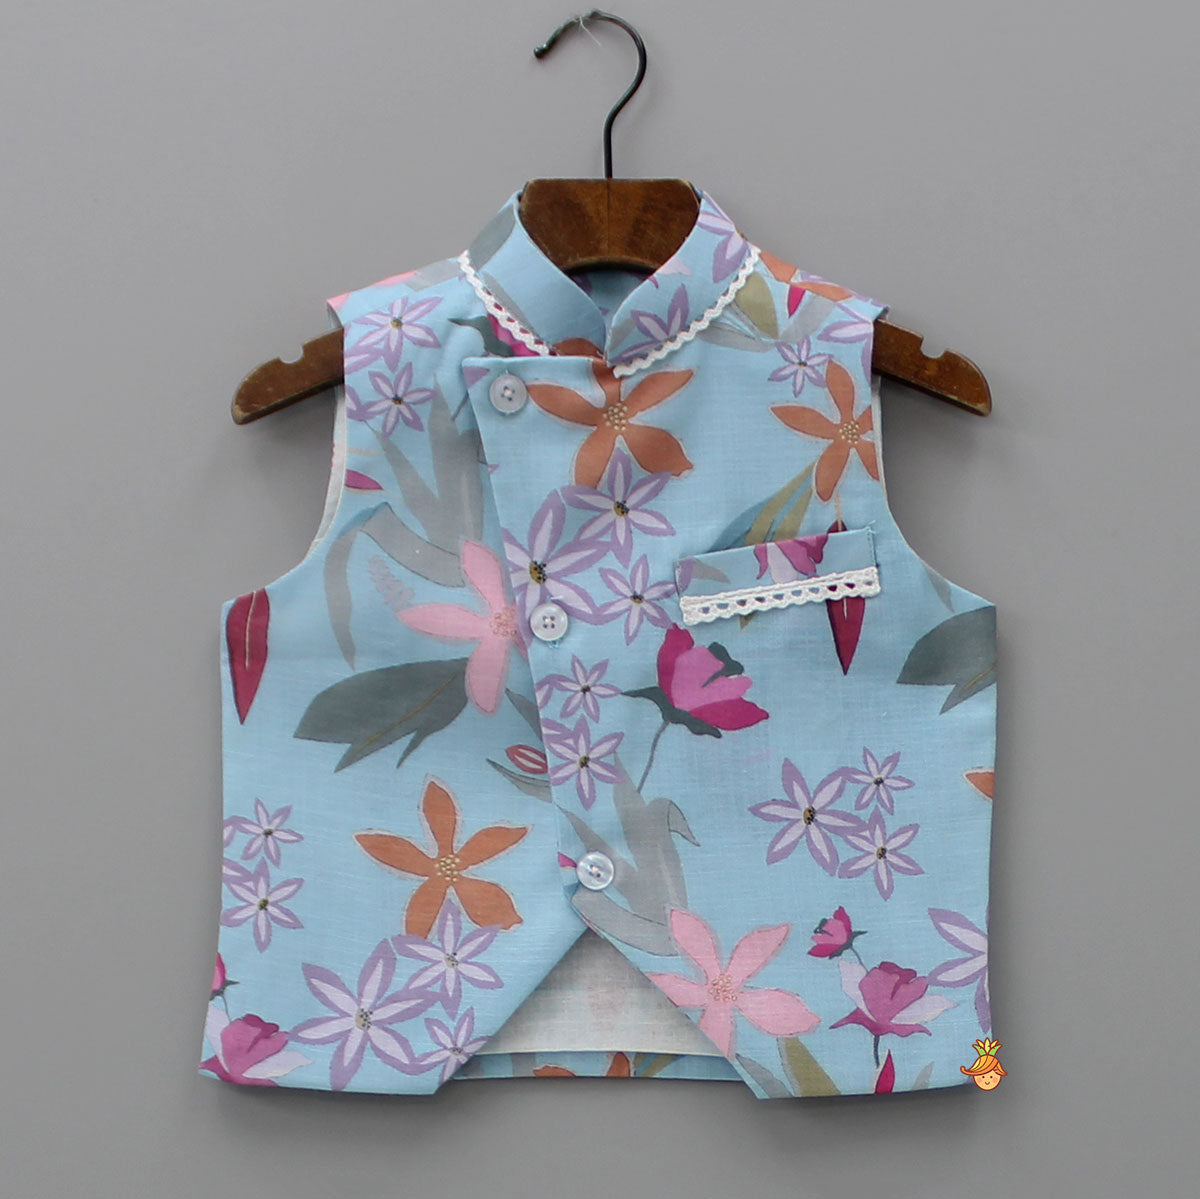 Blue Floral Printed Jacket With Pink Kurta And Pyjama